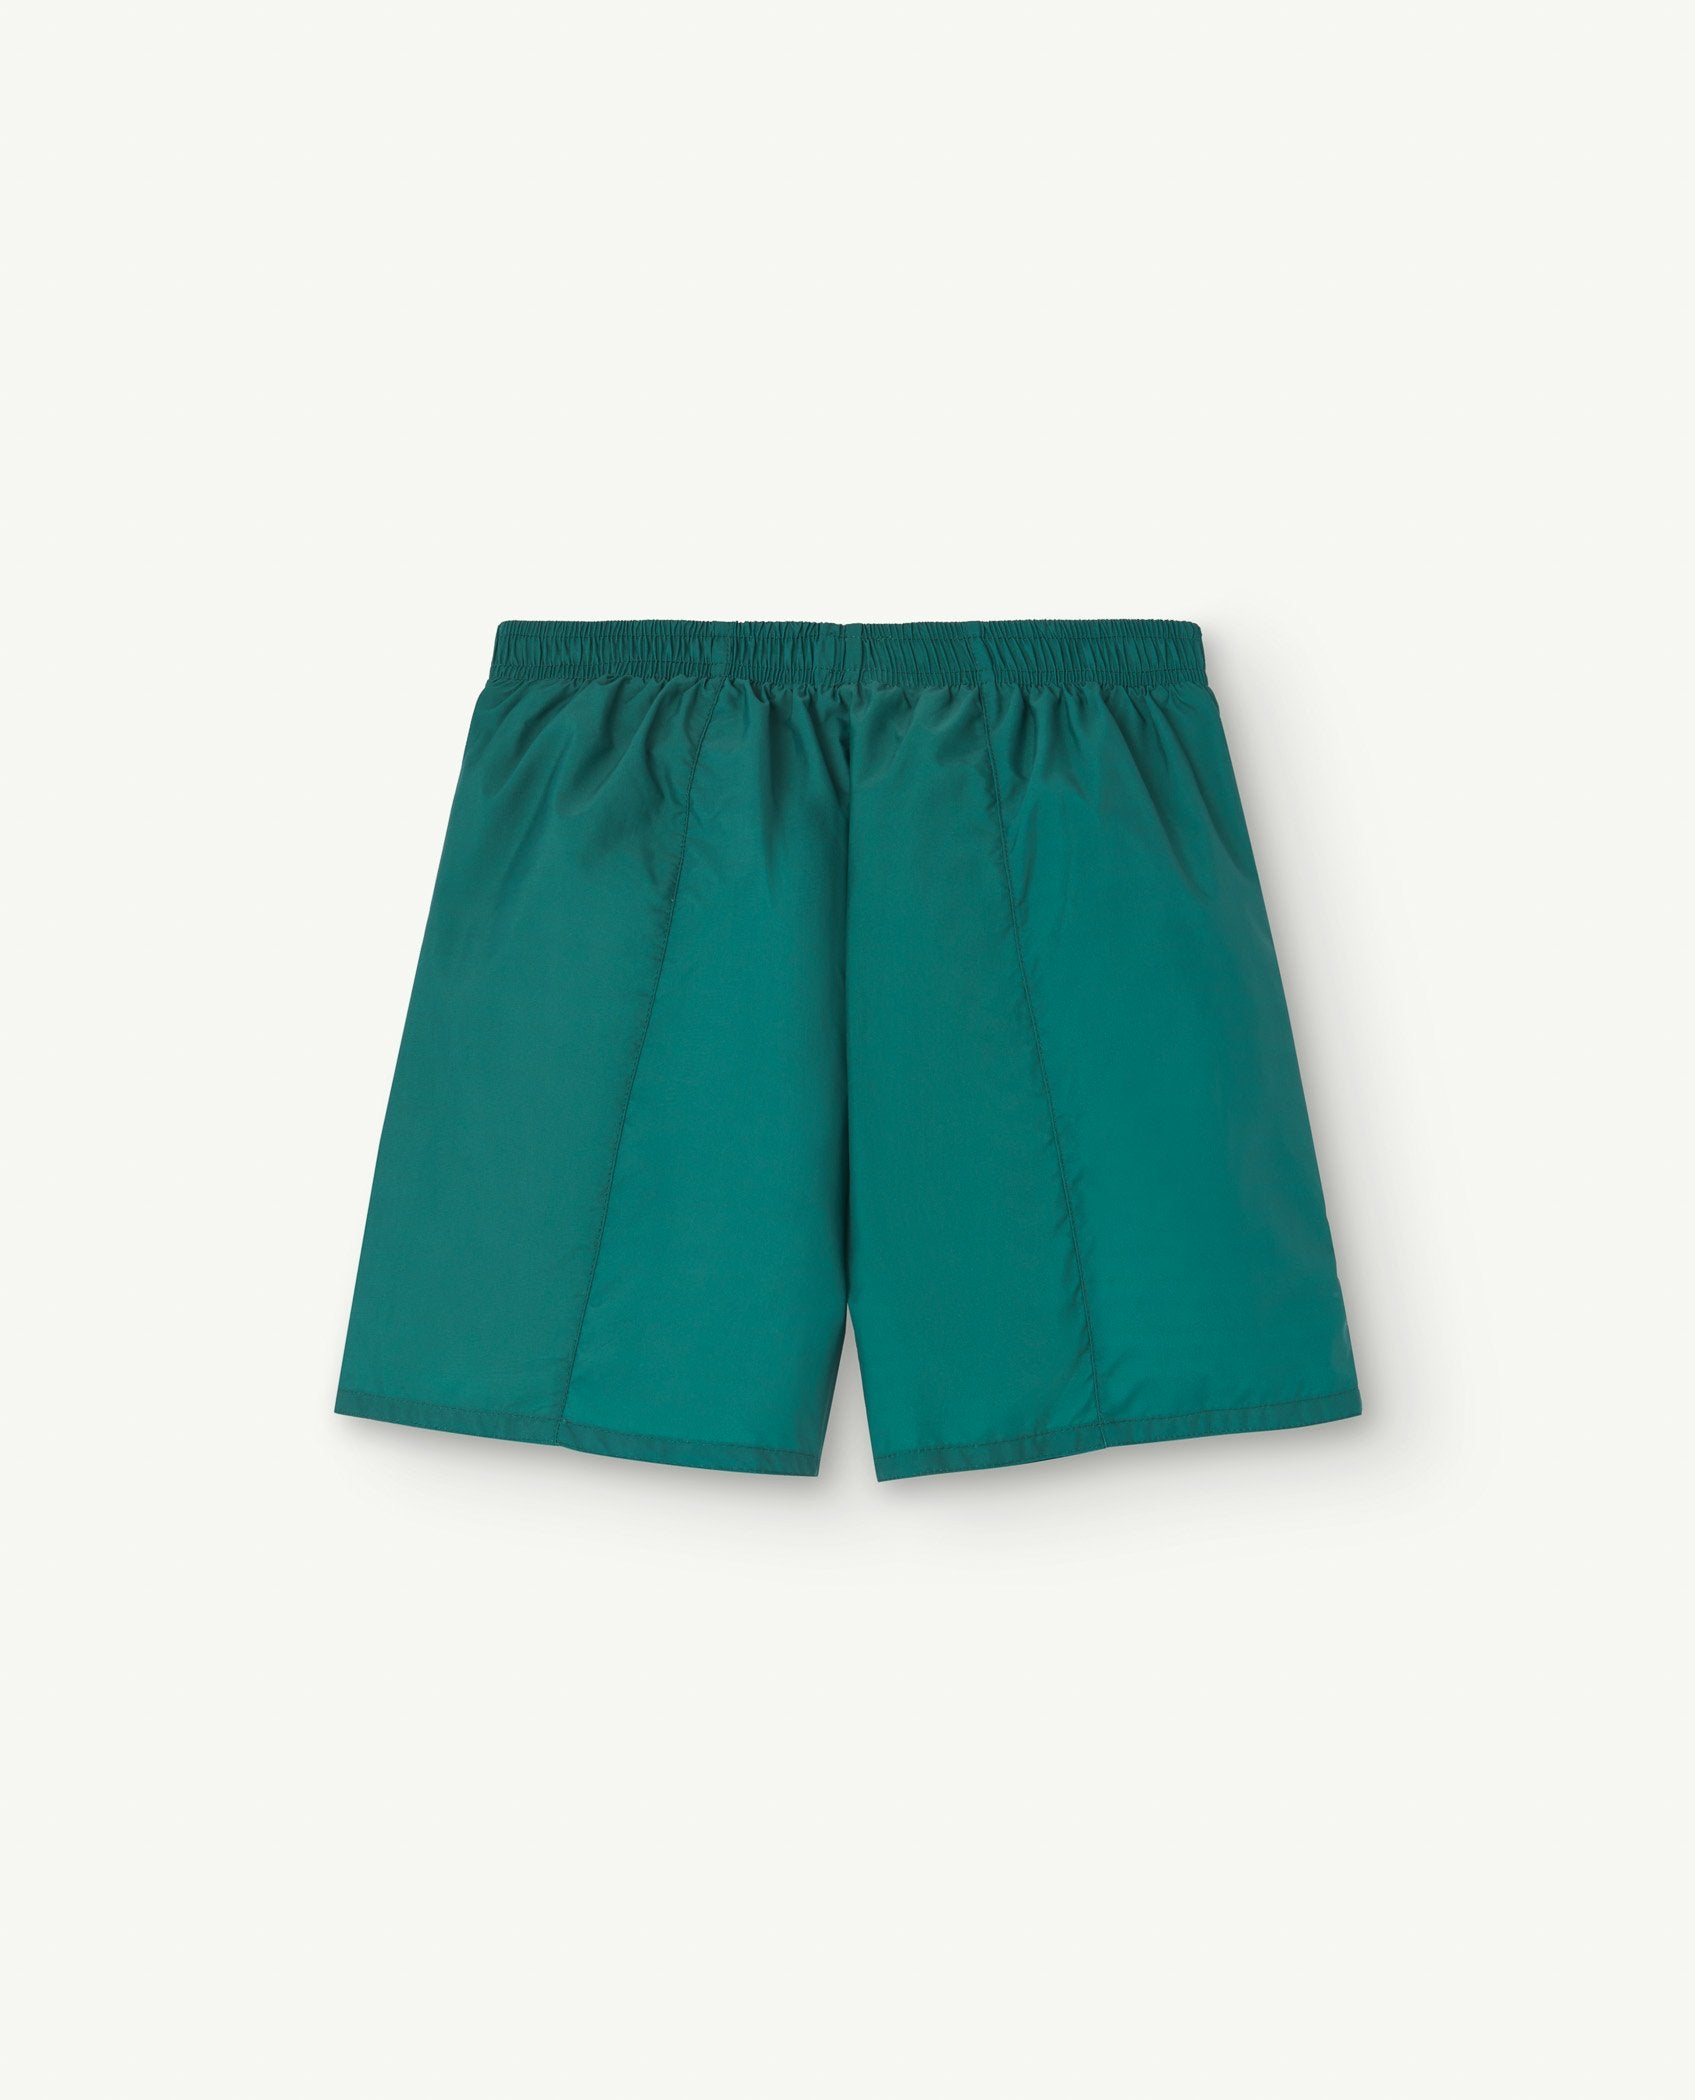 Green Puppy Swim Shorts PRODUCT BACK